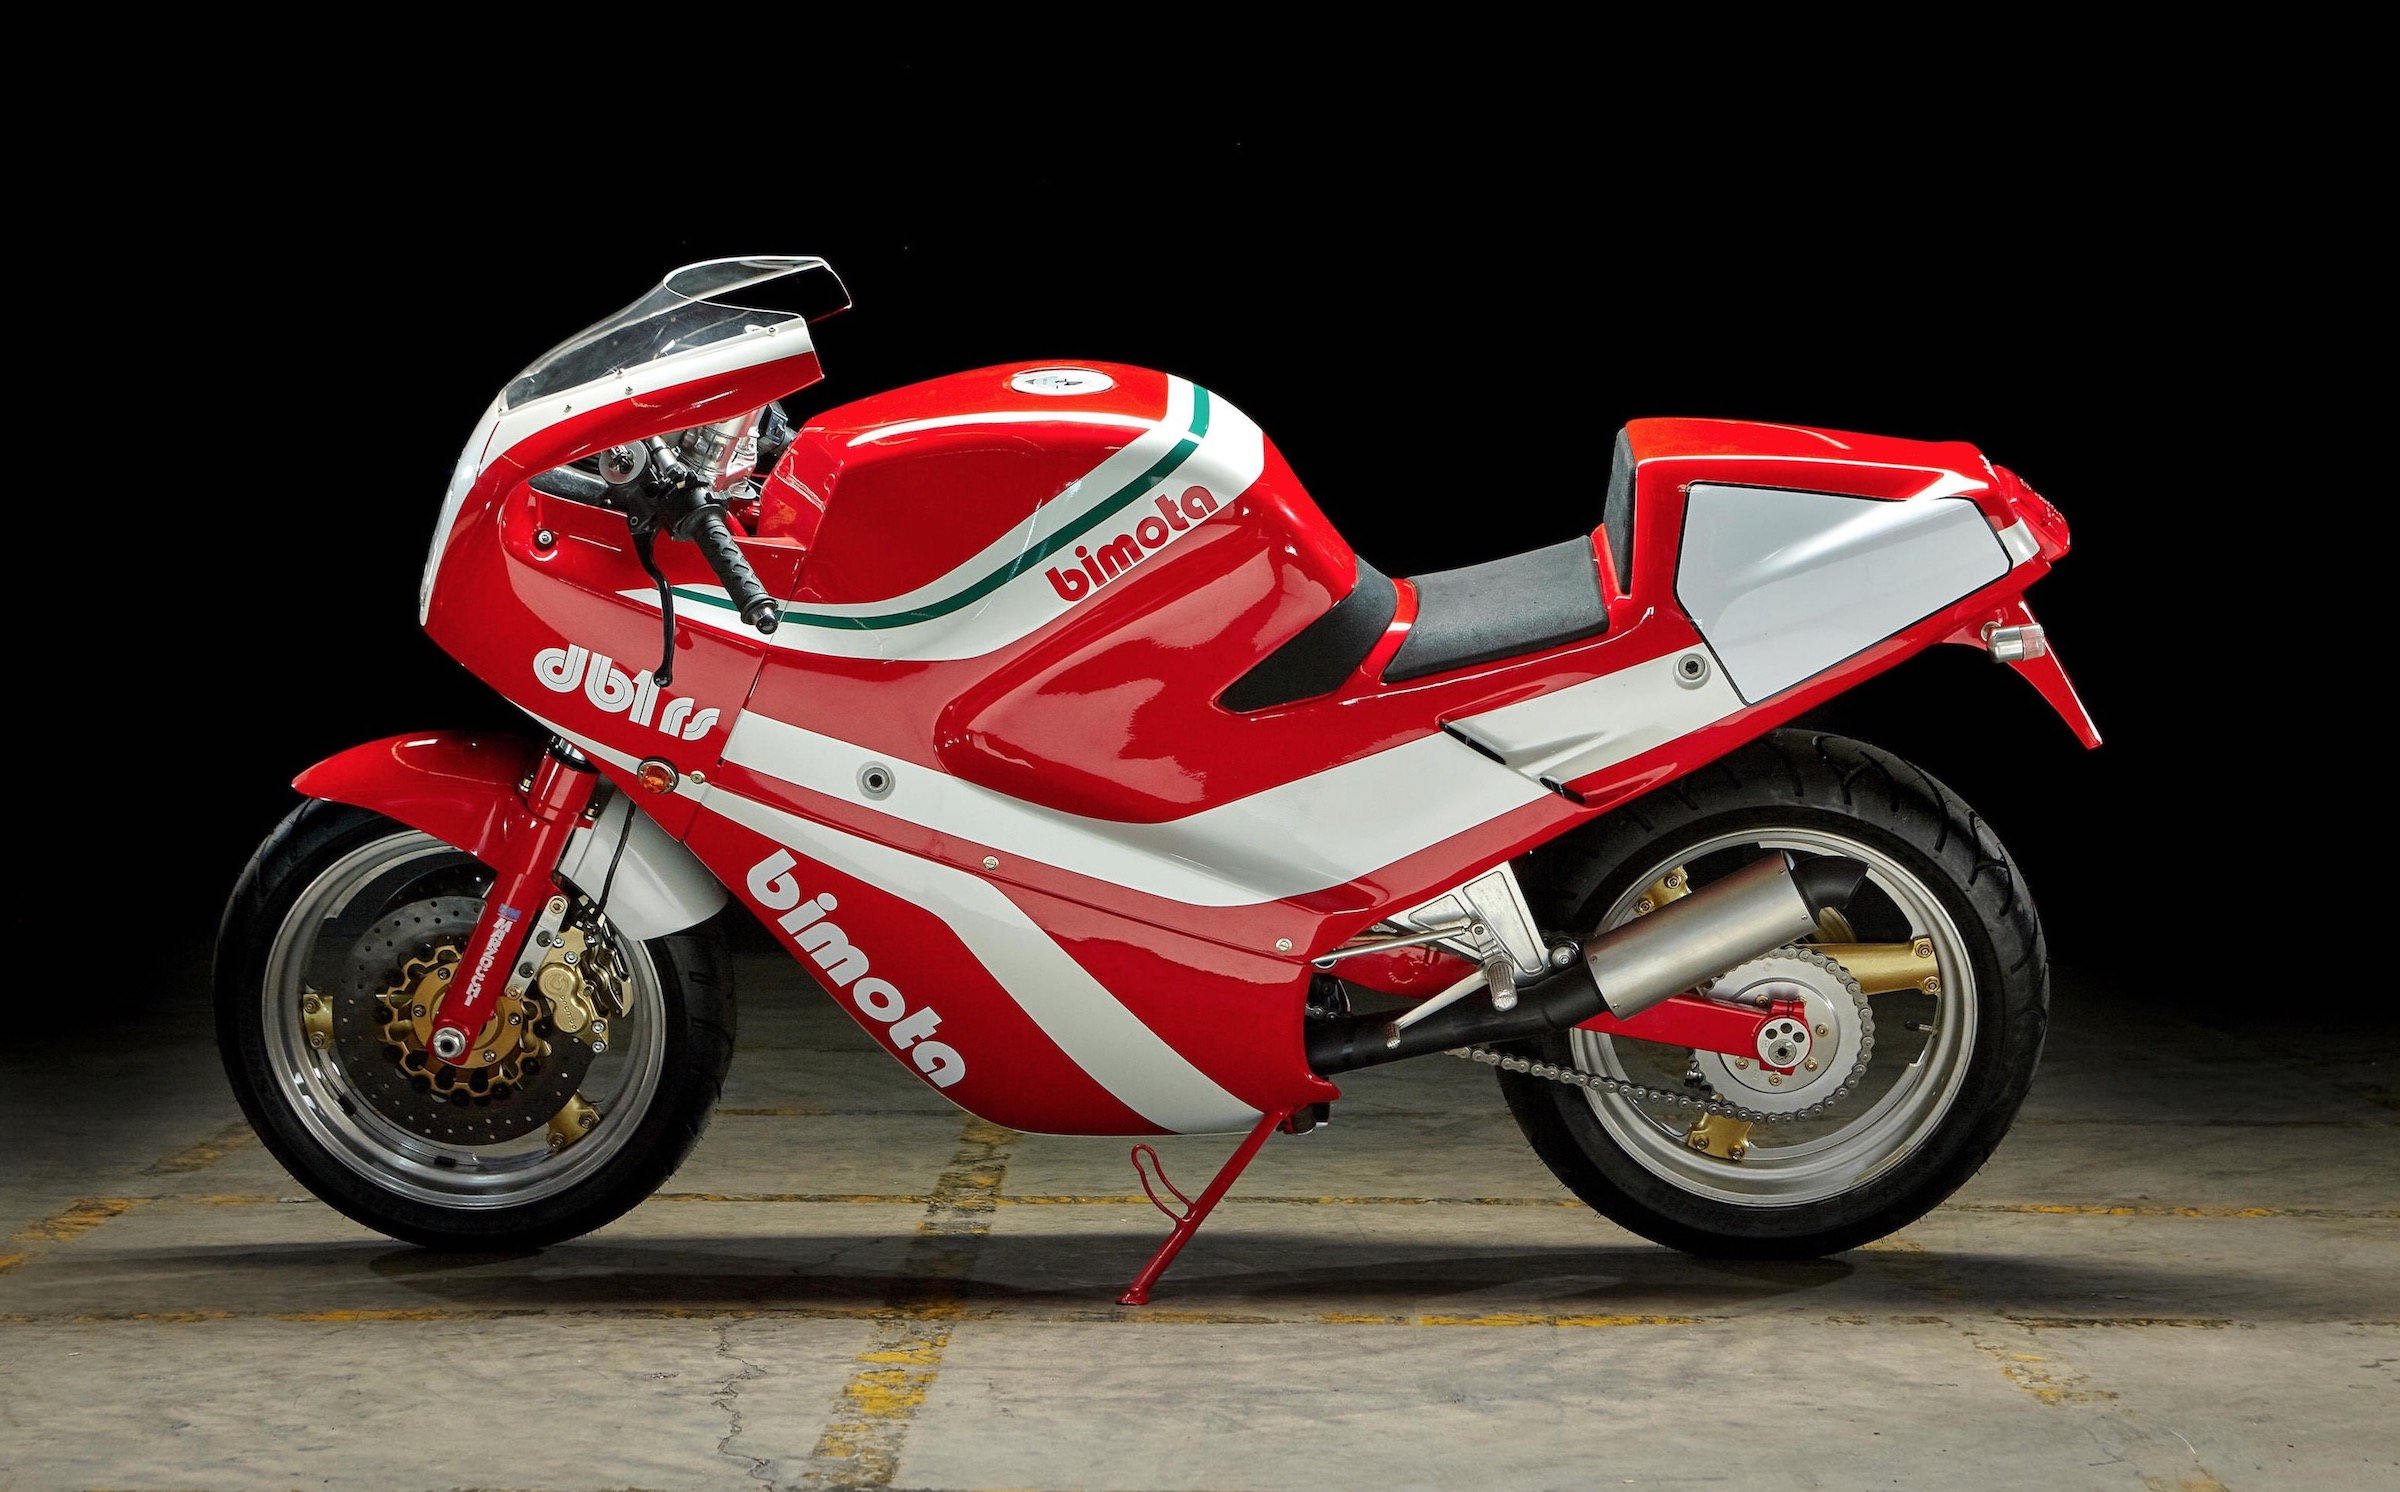 The Bimota DB1 SR – A Double-Barrelled Superbike